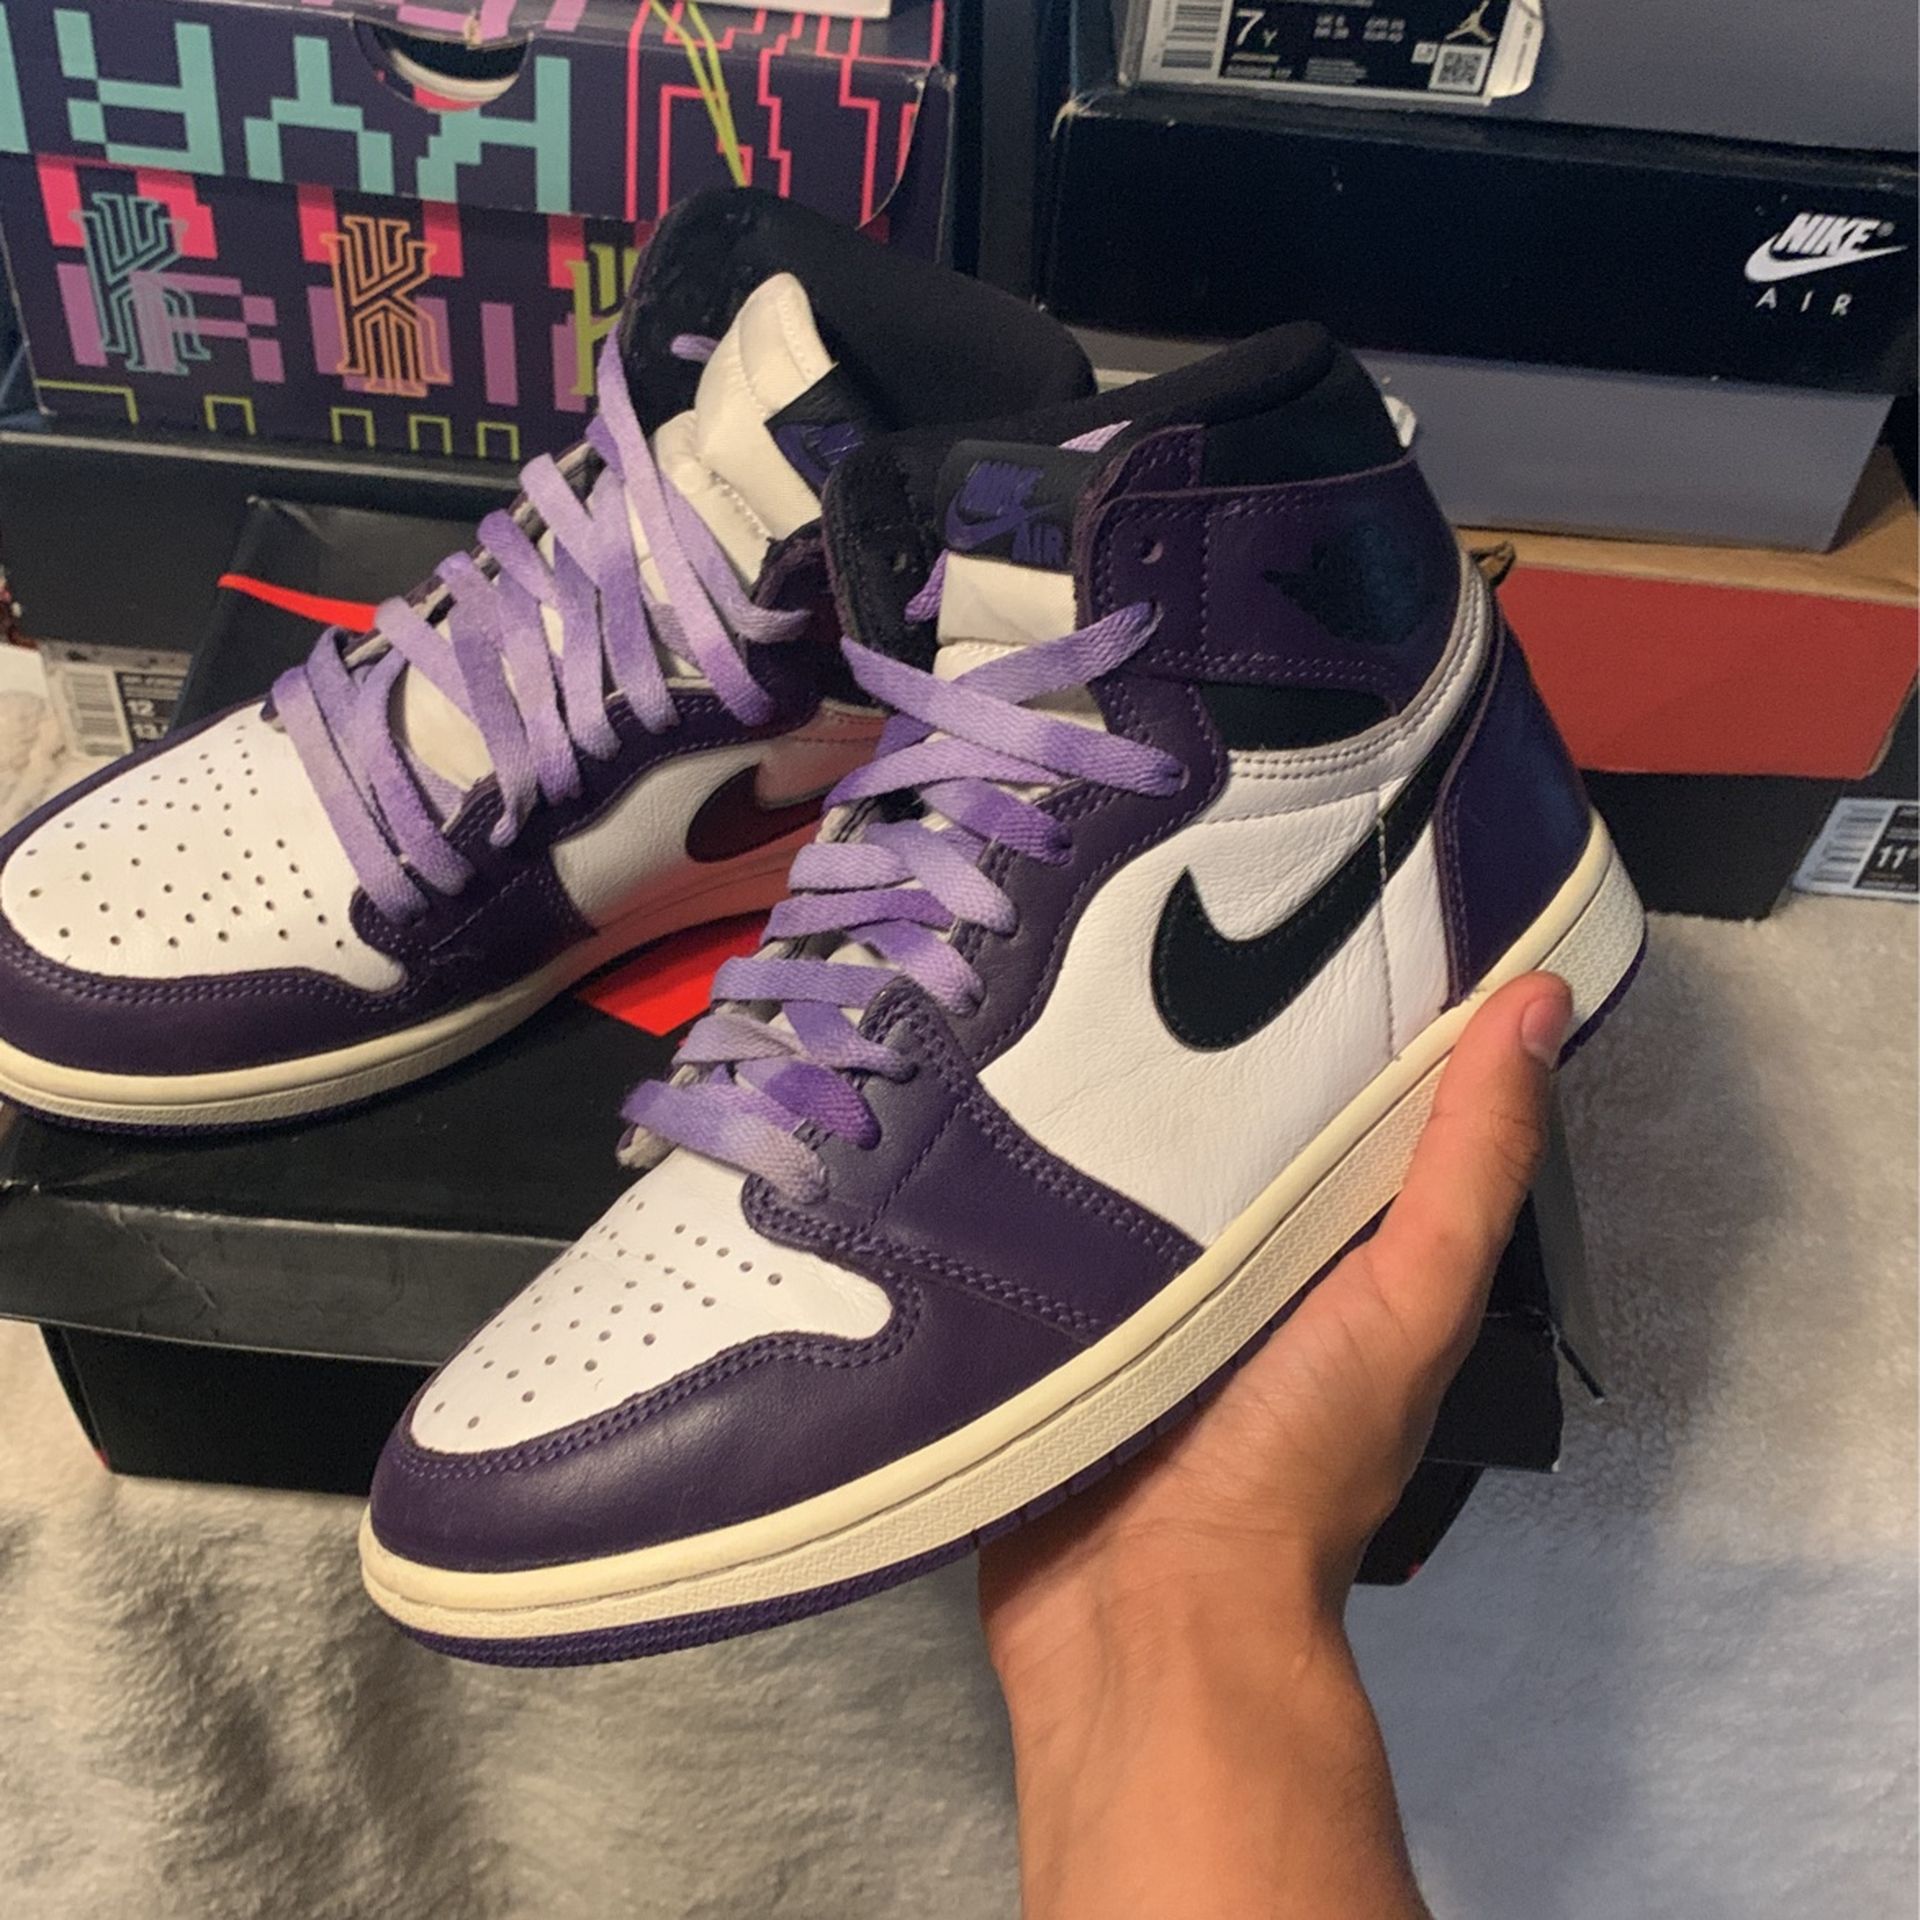 Jordan 1 ‘Court Purple’ Size 7.5 